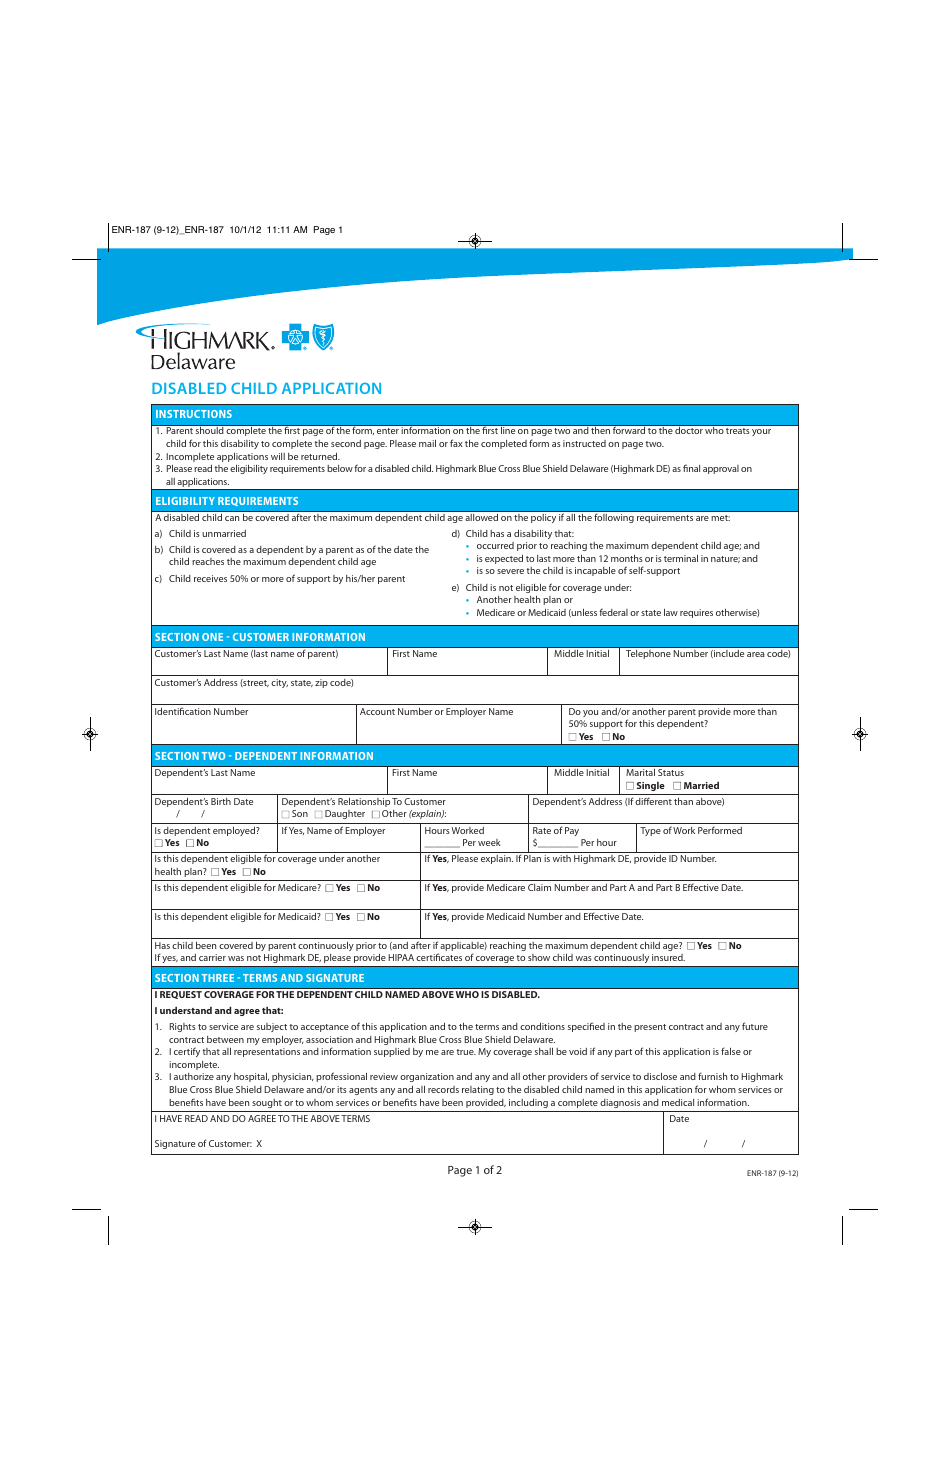 Form ENR-187 Disabled Child Application - Highmark Blue Cross Blue Shield - Delaware, Page 1